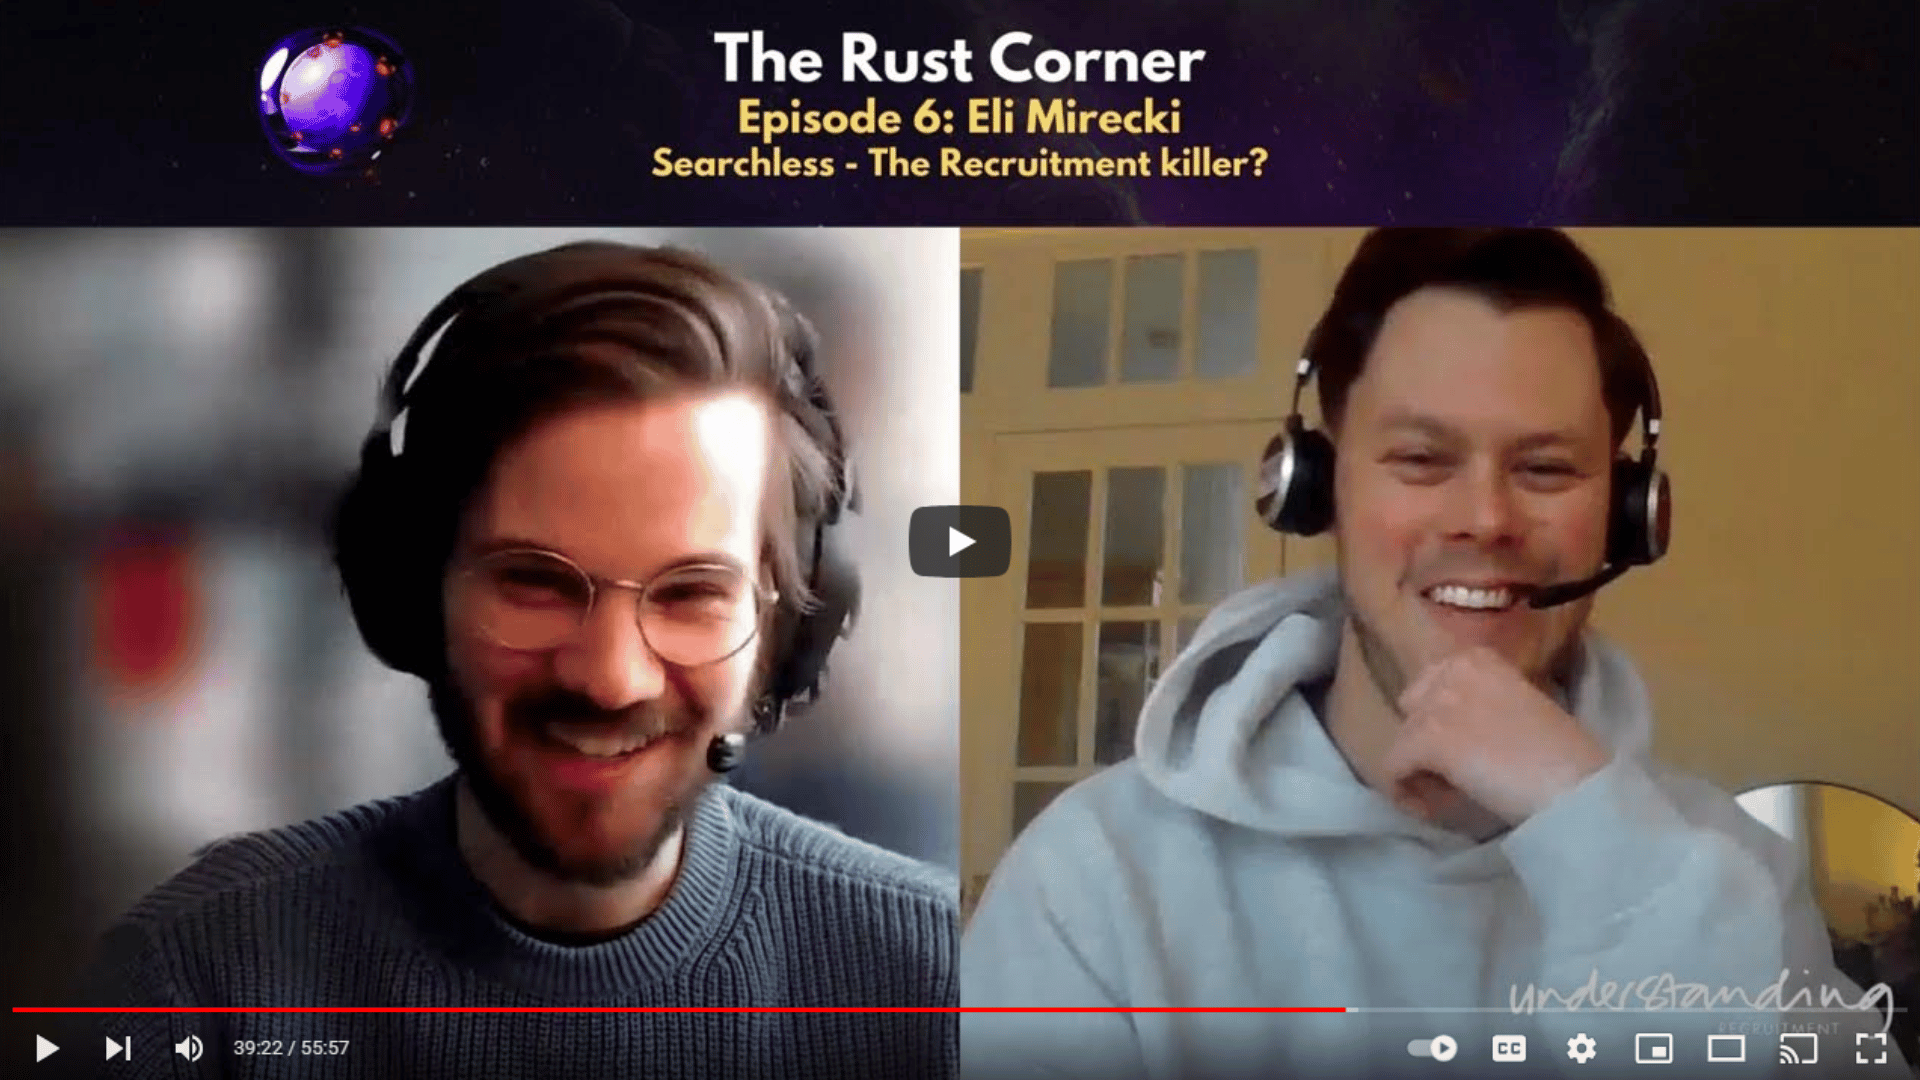 The Rust Corner Podcast Episode 6: Eli Mirecki